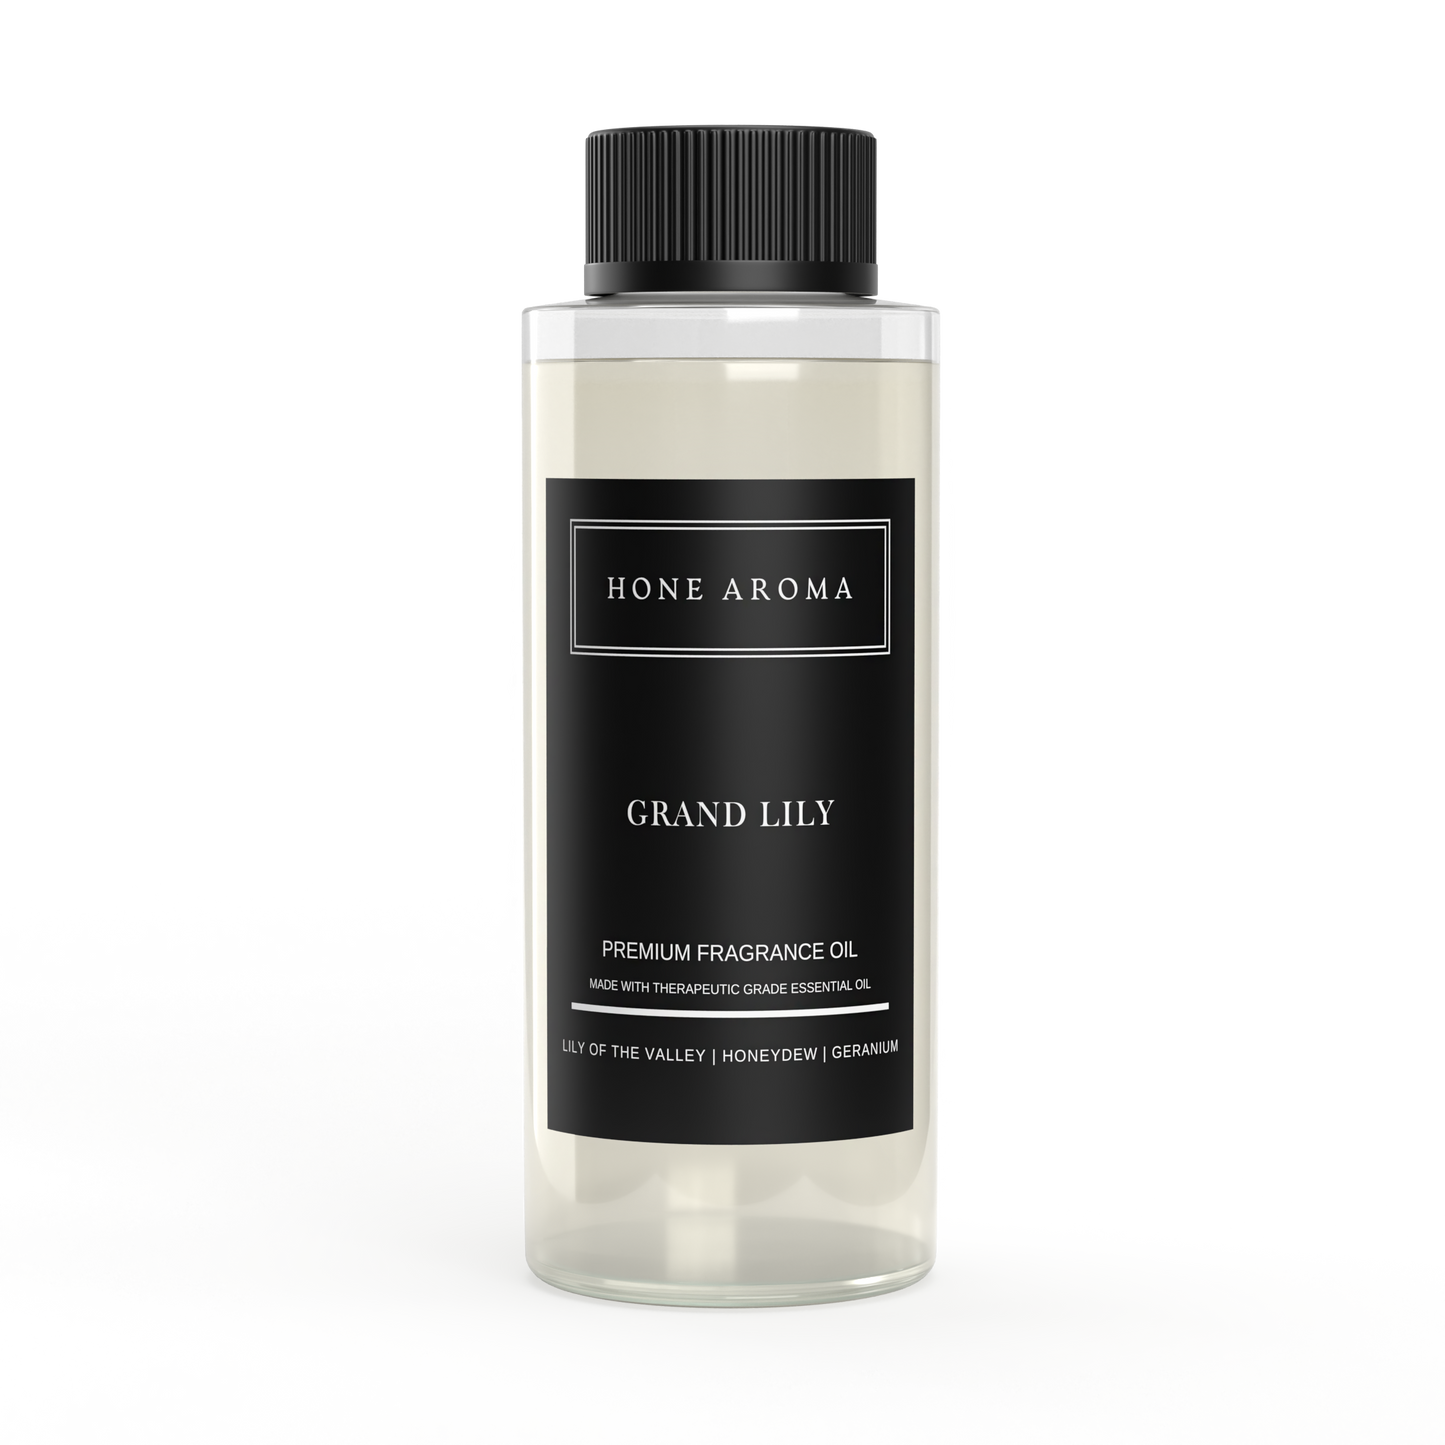 Grand Lily (Hotel Scent) Premium Concentrate Aroma Oil